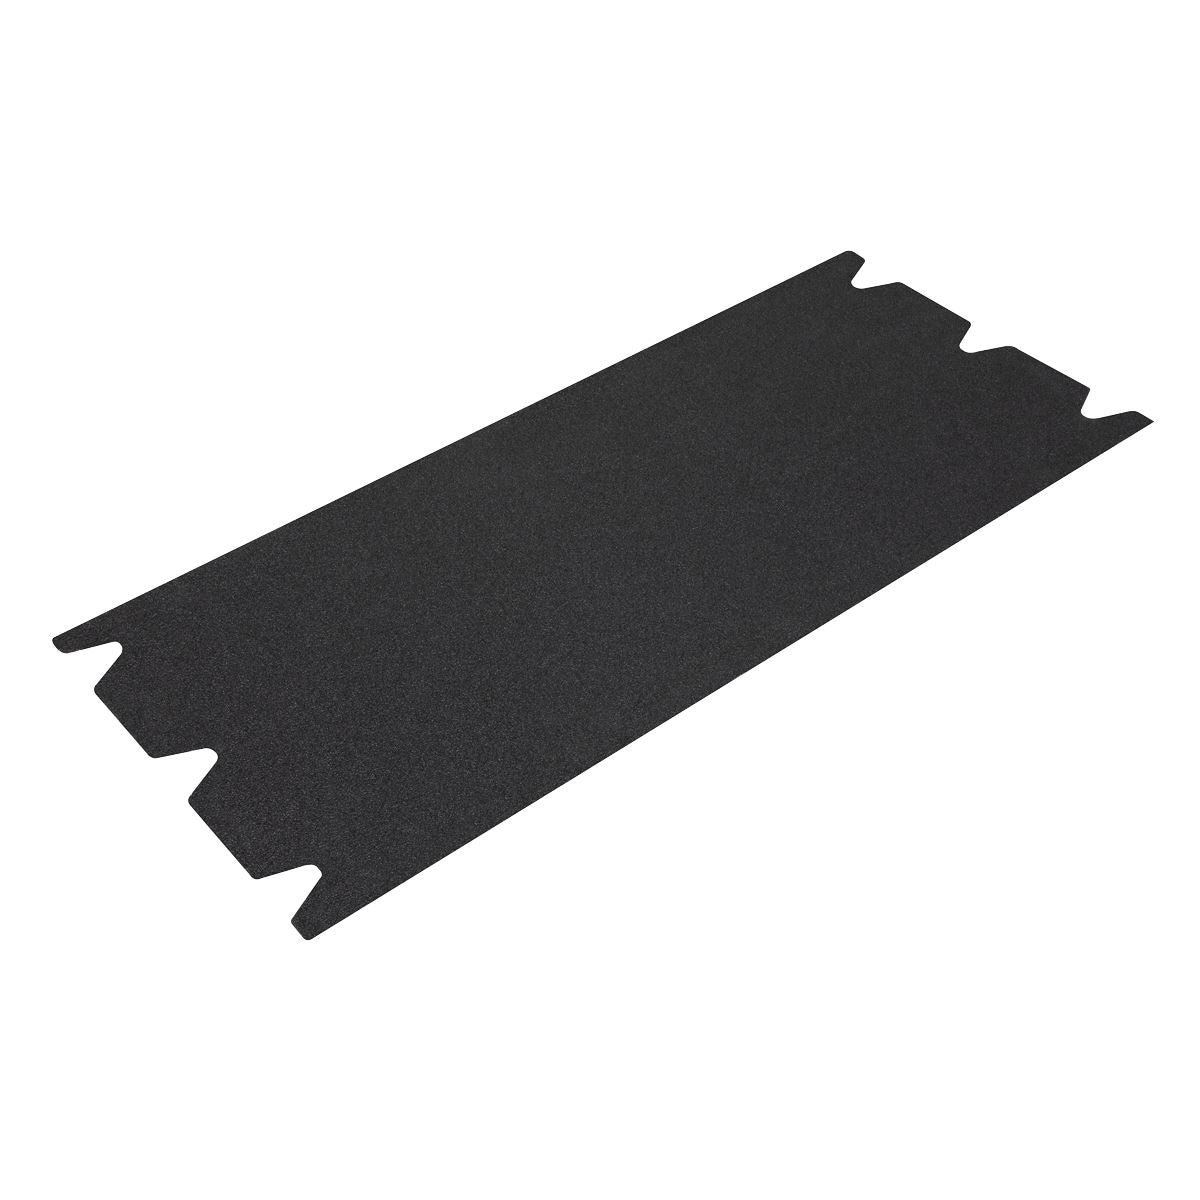 Sealey Floor Sanding Sheet 203 x 495mm 40Grit - Pack of 25